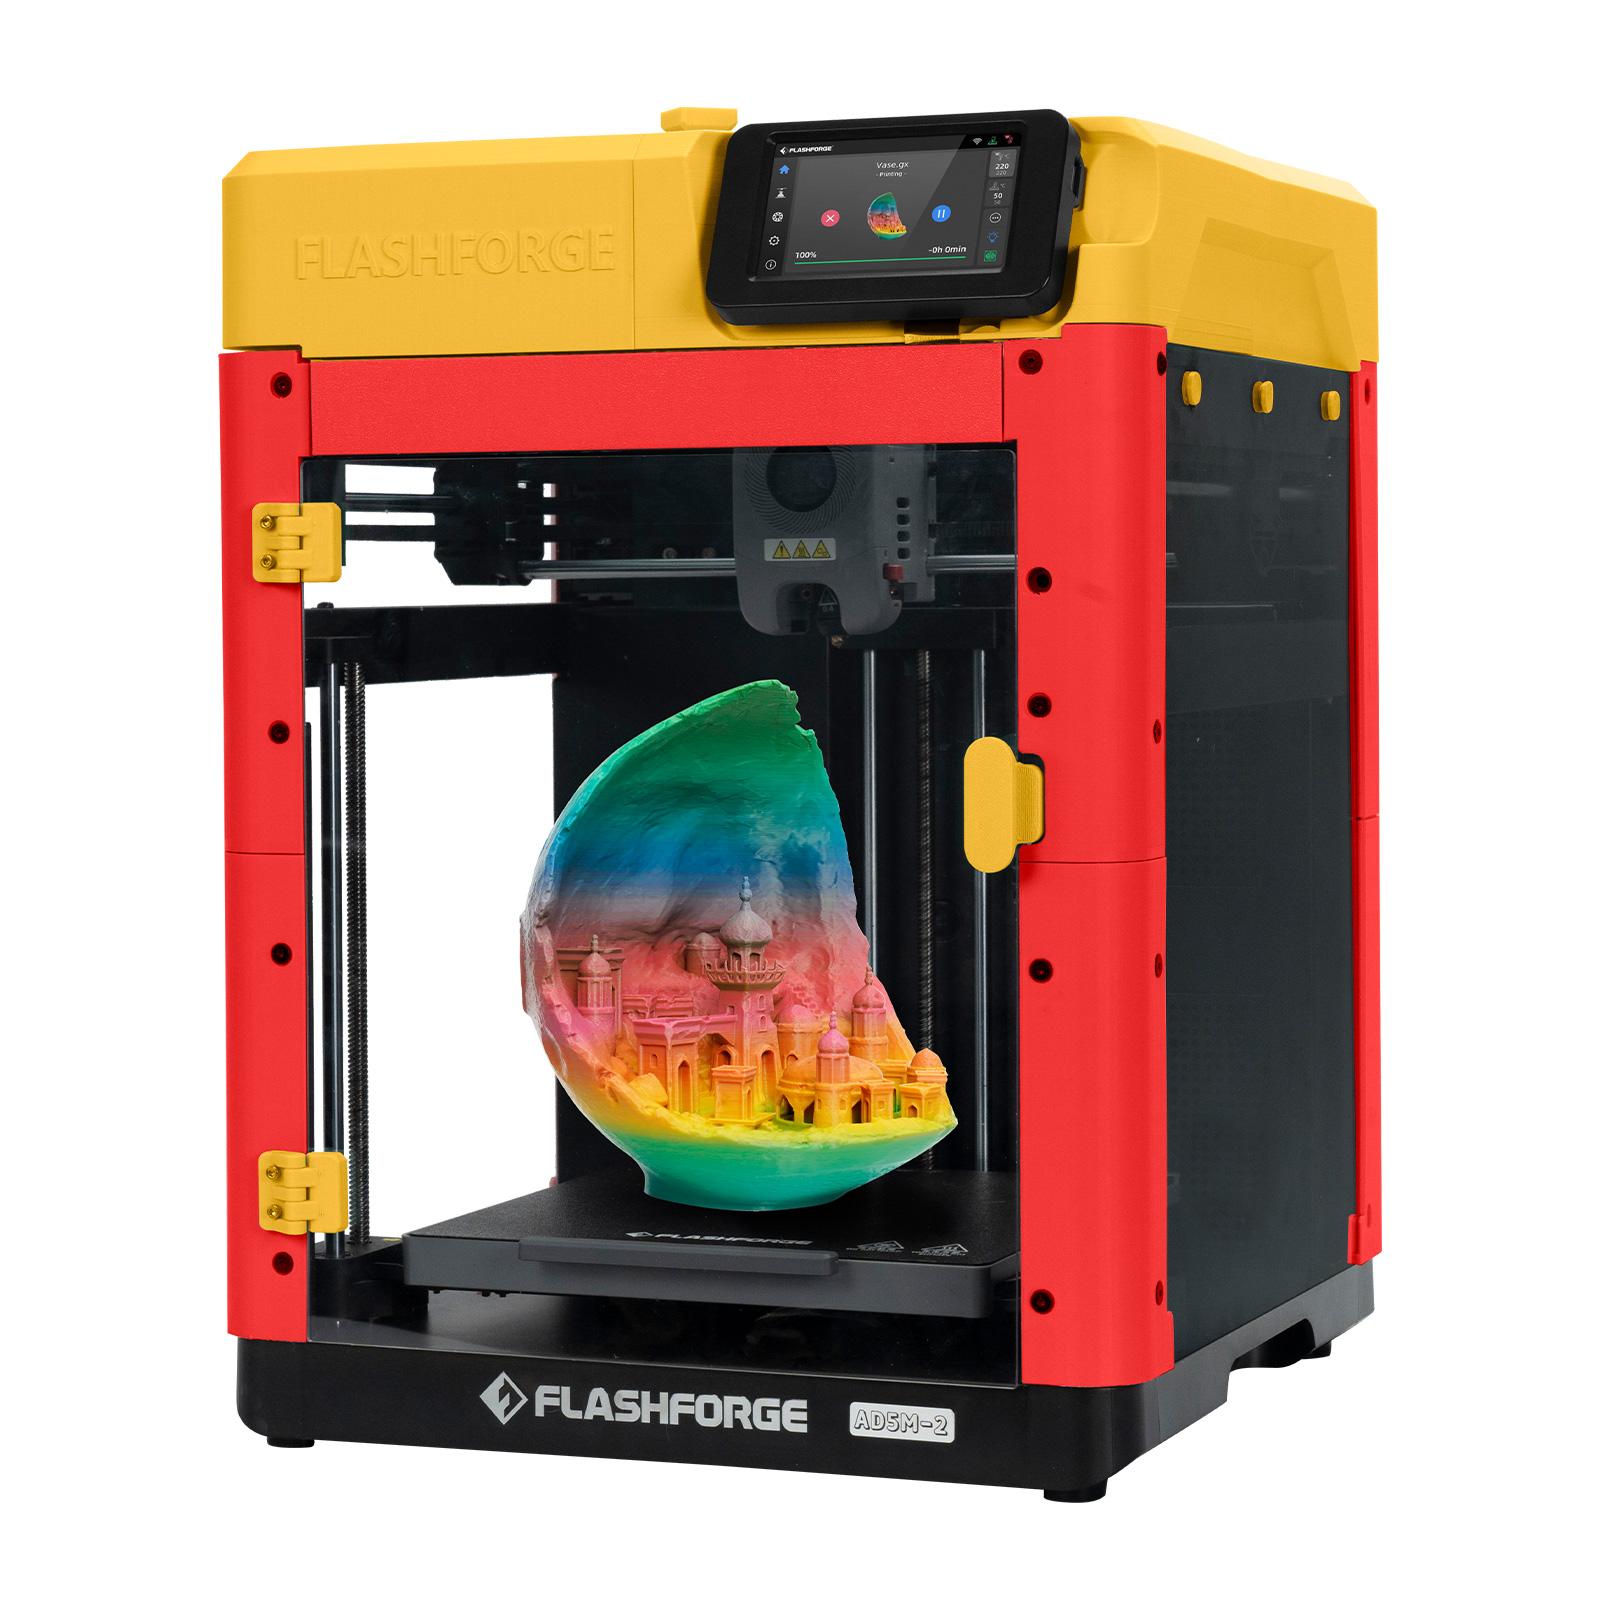 Imprimante 3D Flashforge New Finder - Technologie Services